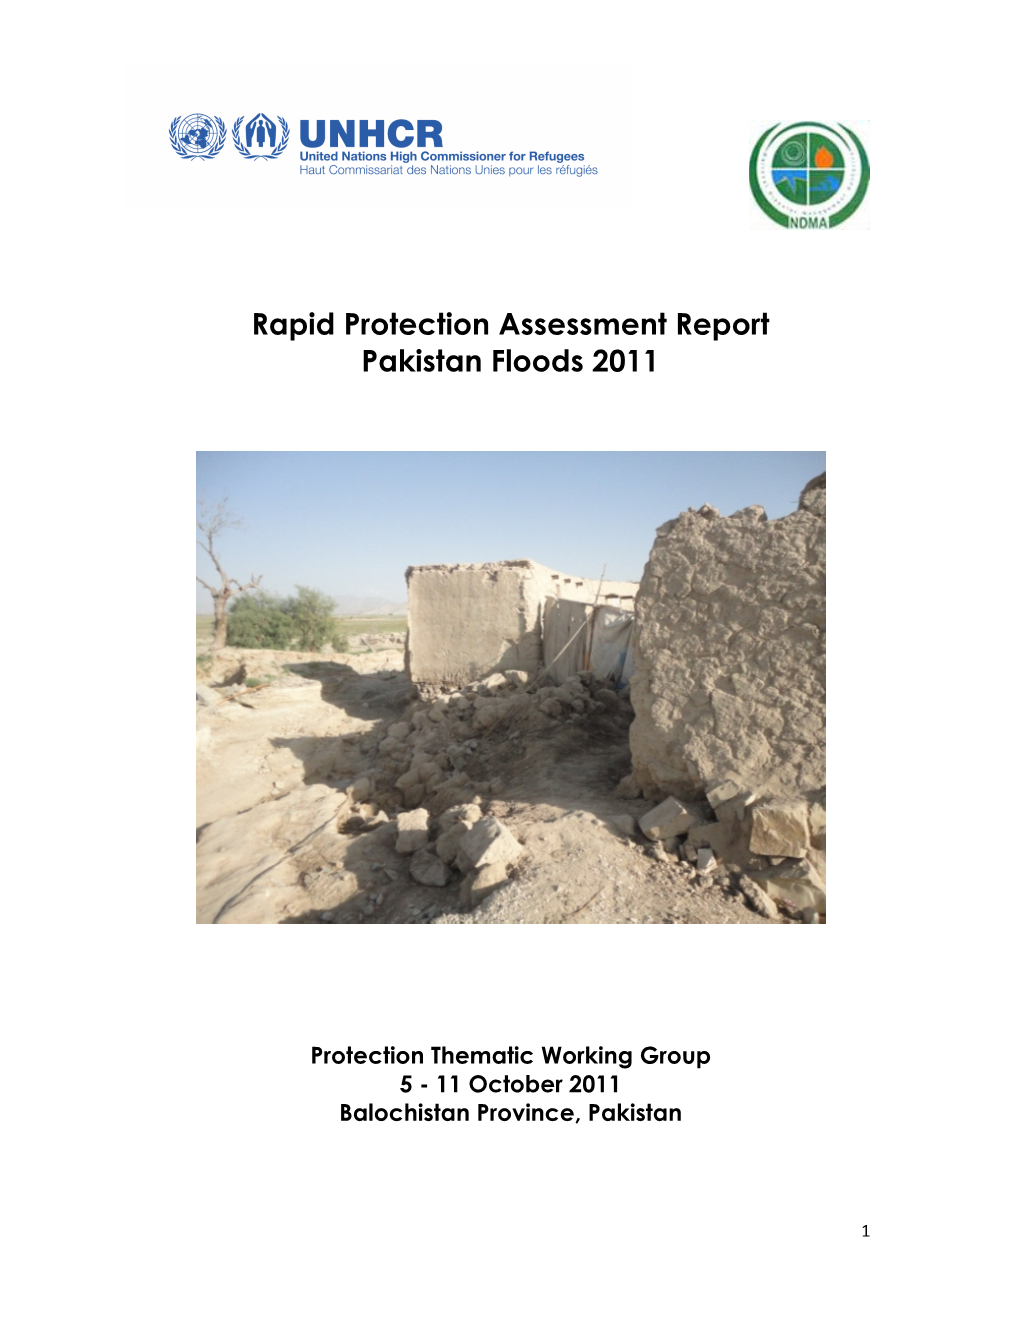 Rapid Protection Assessment Report Pakistan Floods 2011